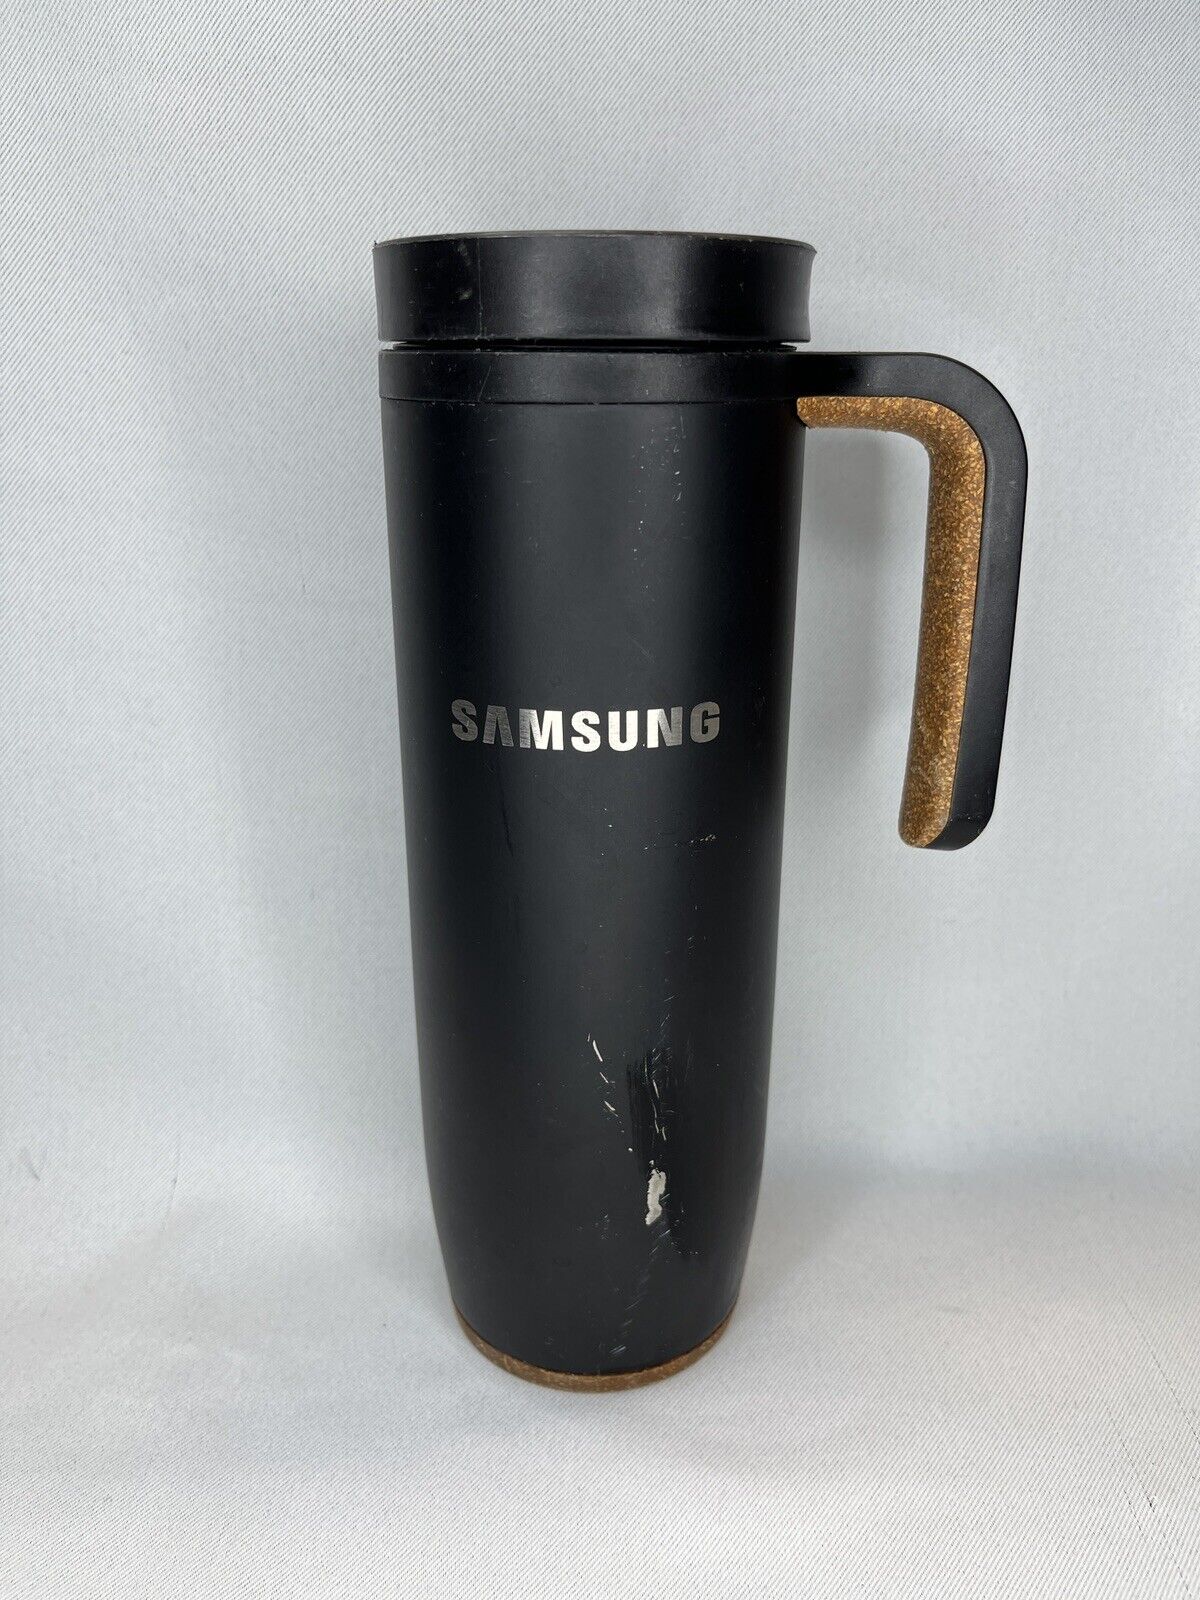 Ello Samsung Metallic Insulated Coffee Cup Travel Mug Tumbler black cork handle